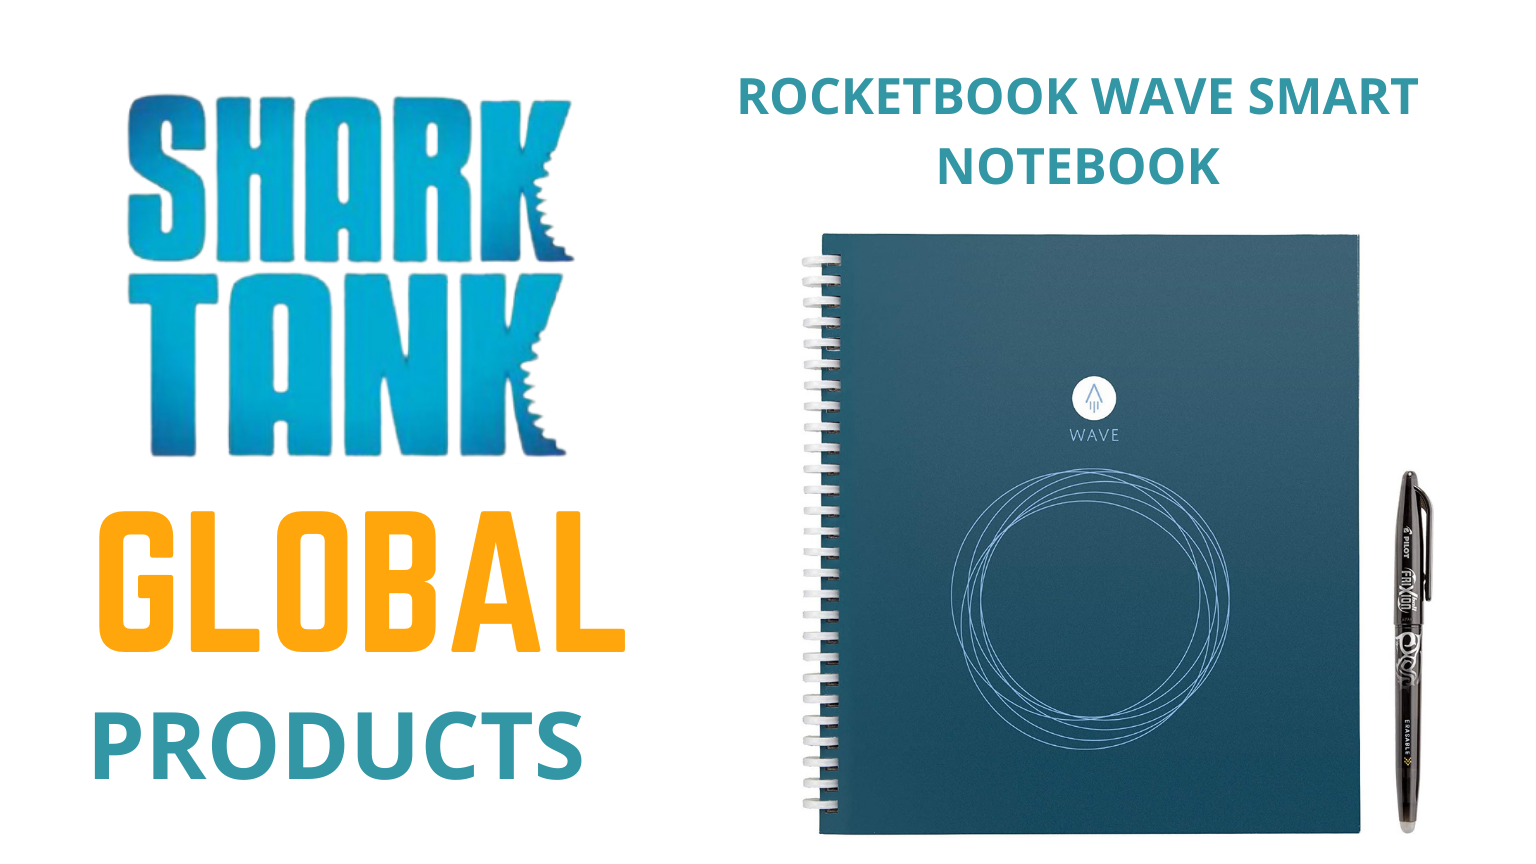 ROCKETBOOK WAVE SMART NOTEBOOK shark tank us